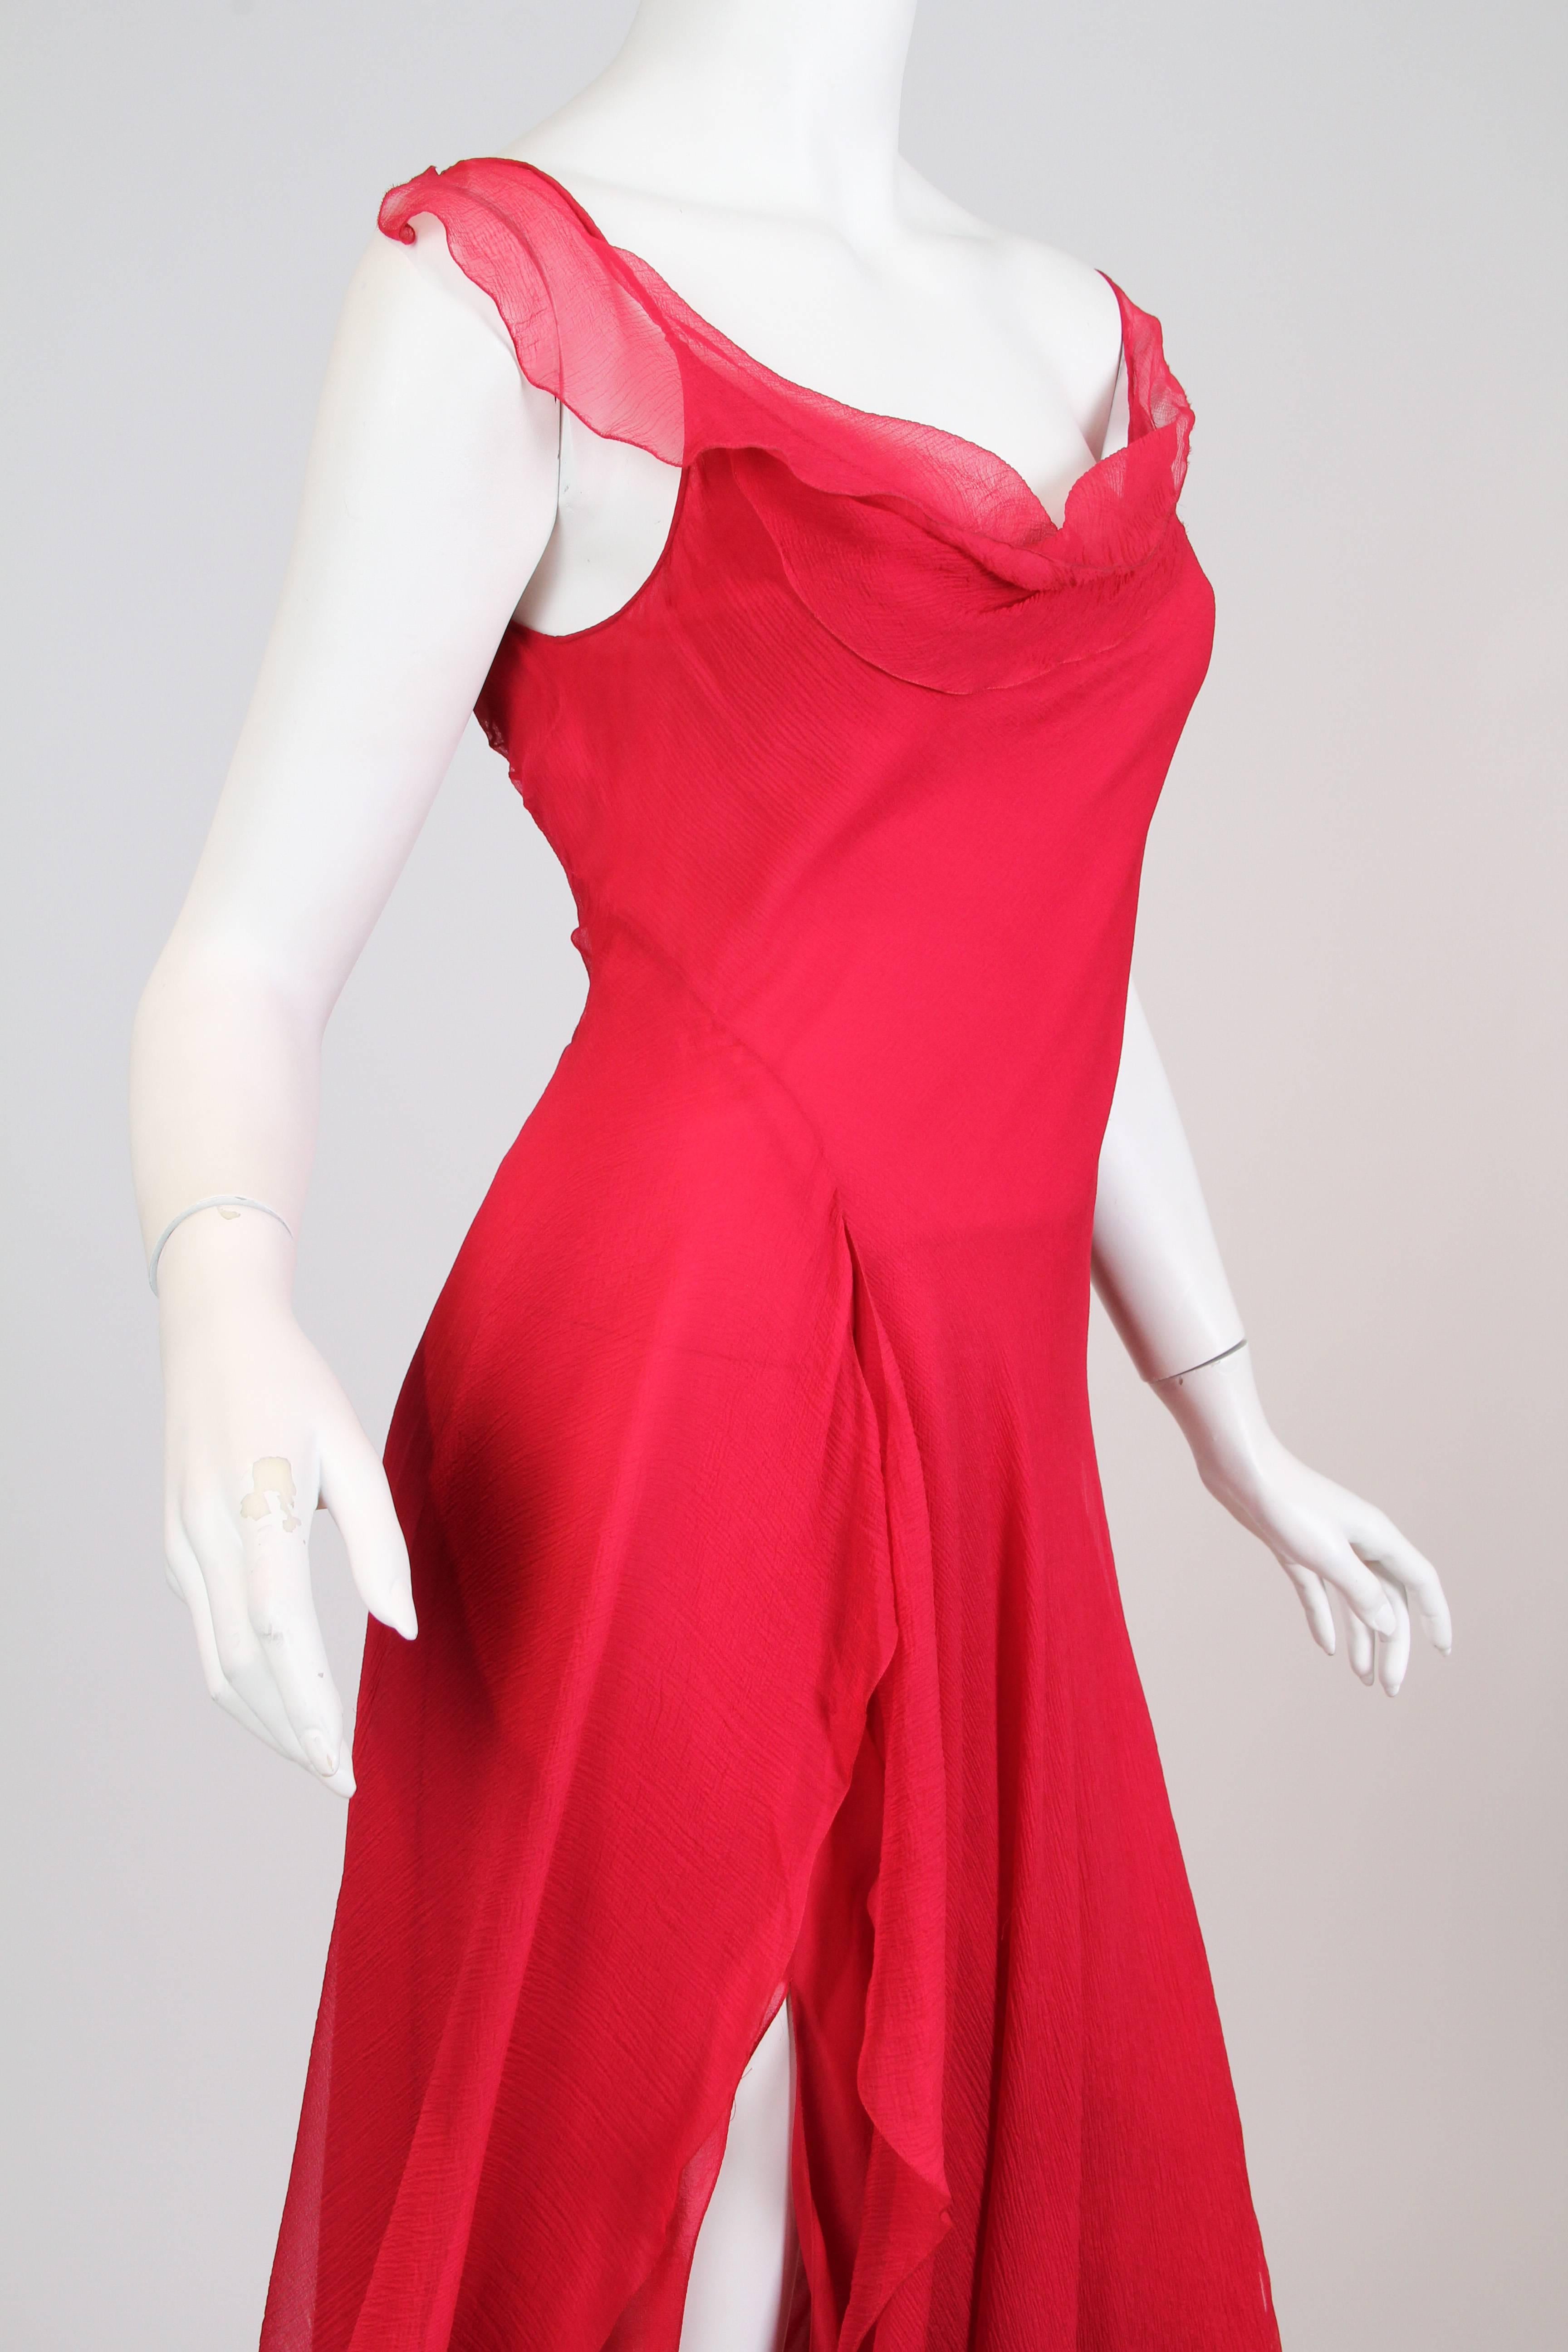 Women's John Galliano Chiffon Dress